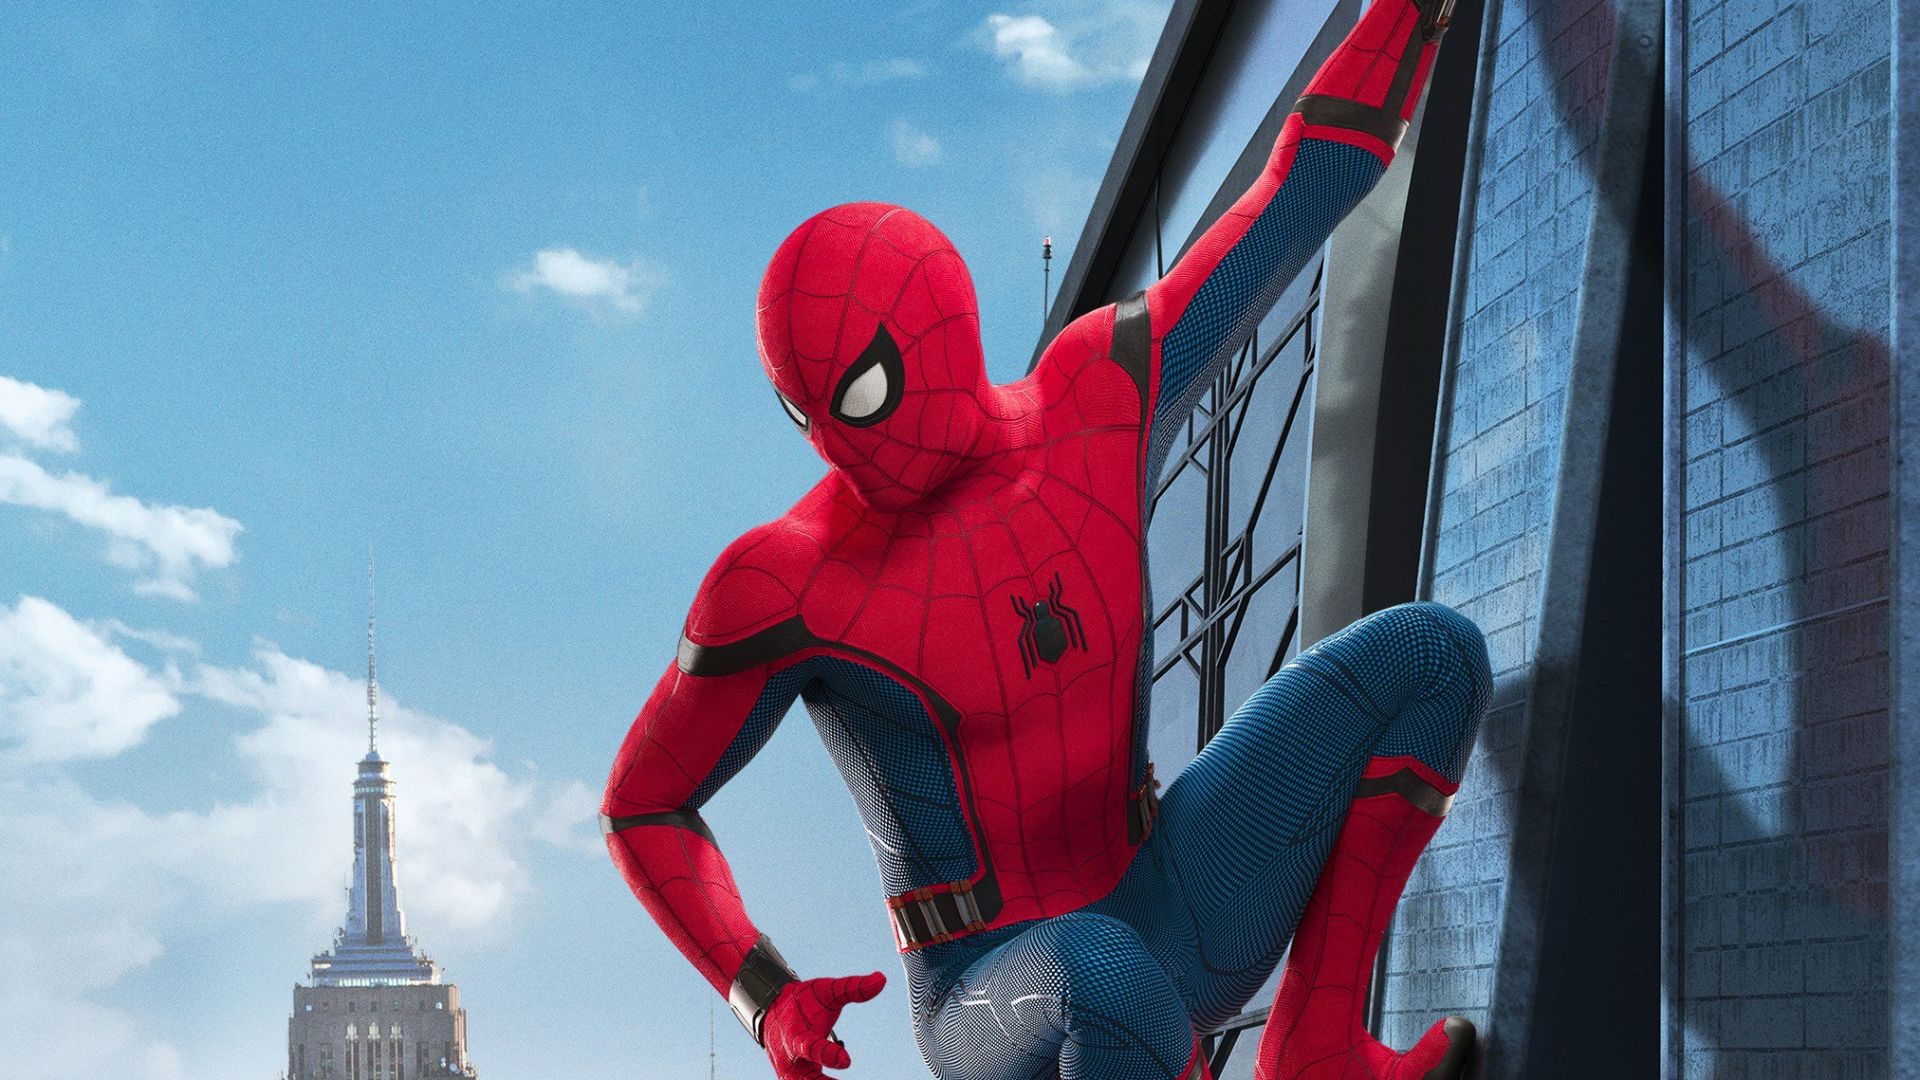 Wallpaper Spider Man: Homecoming, 2017 movie